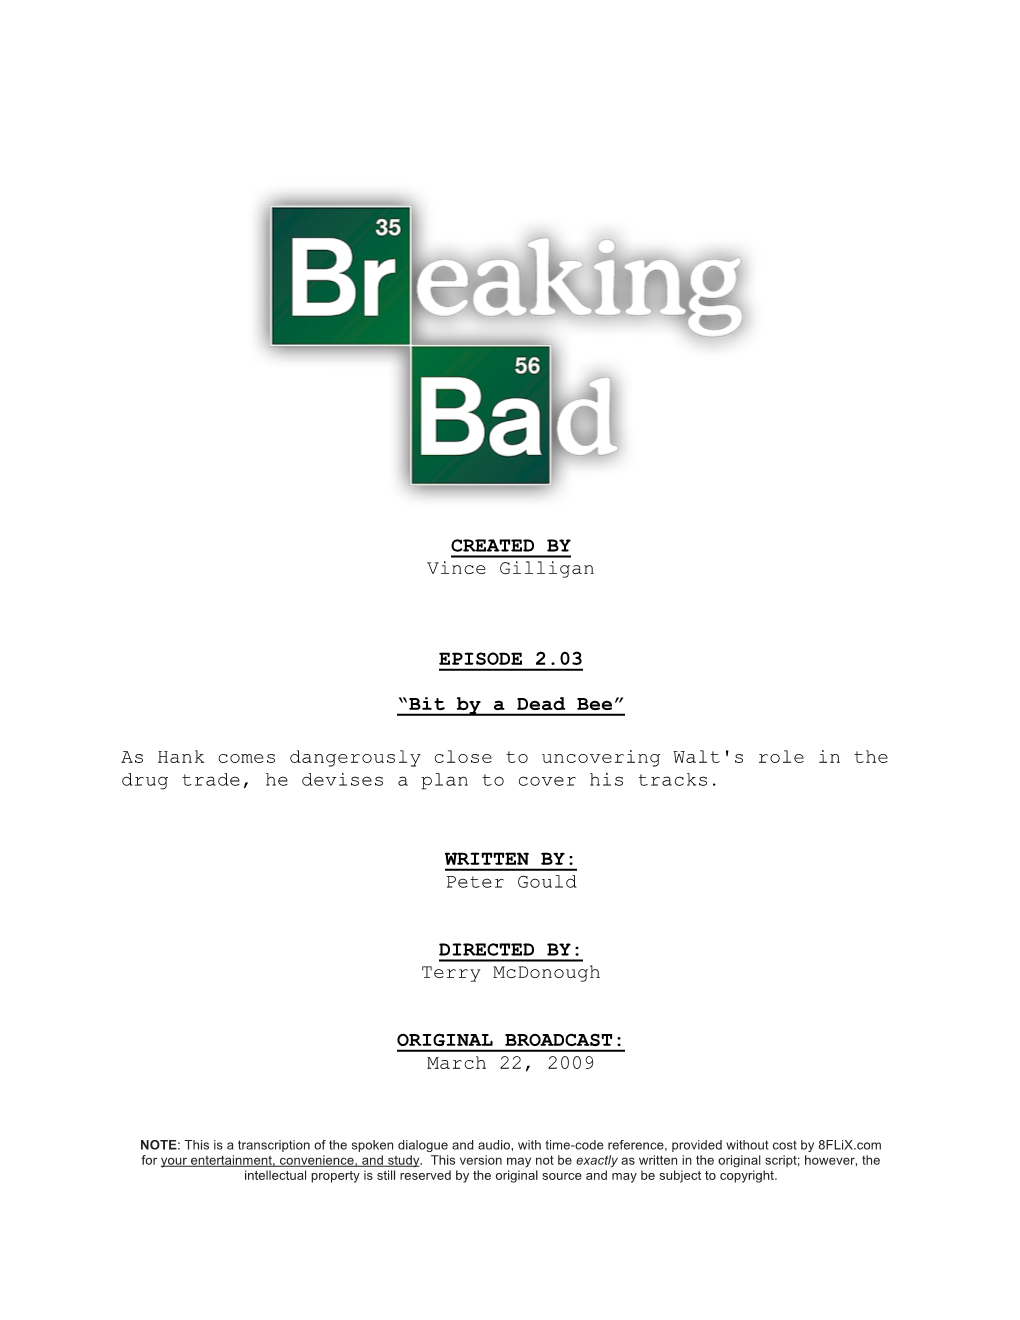 Breaking Bad | Dialogue Transcript | S2:E3